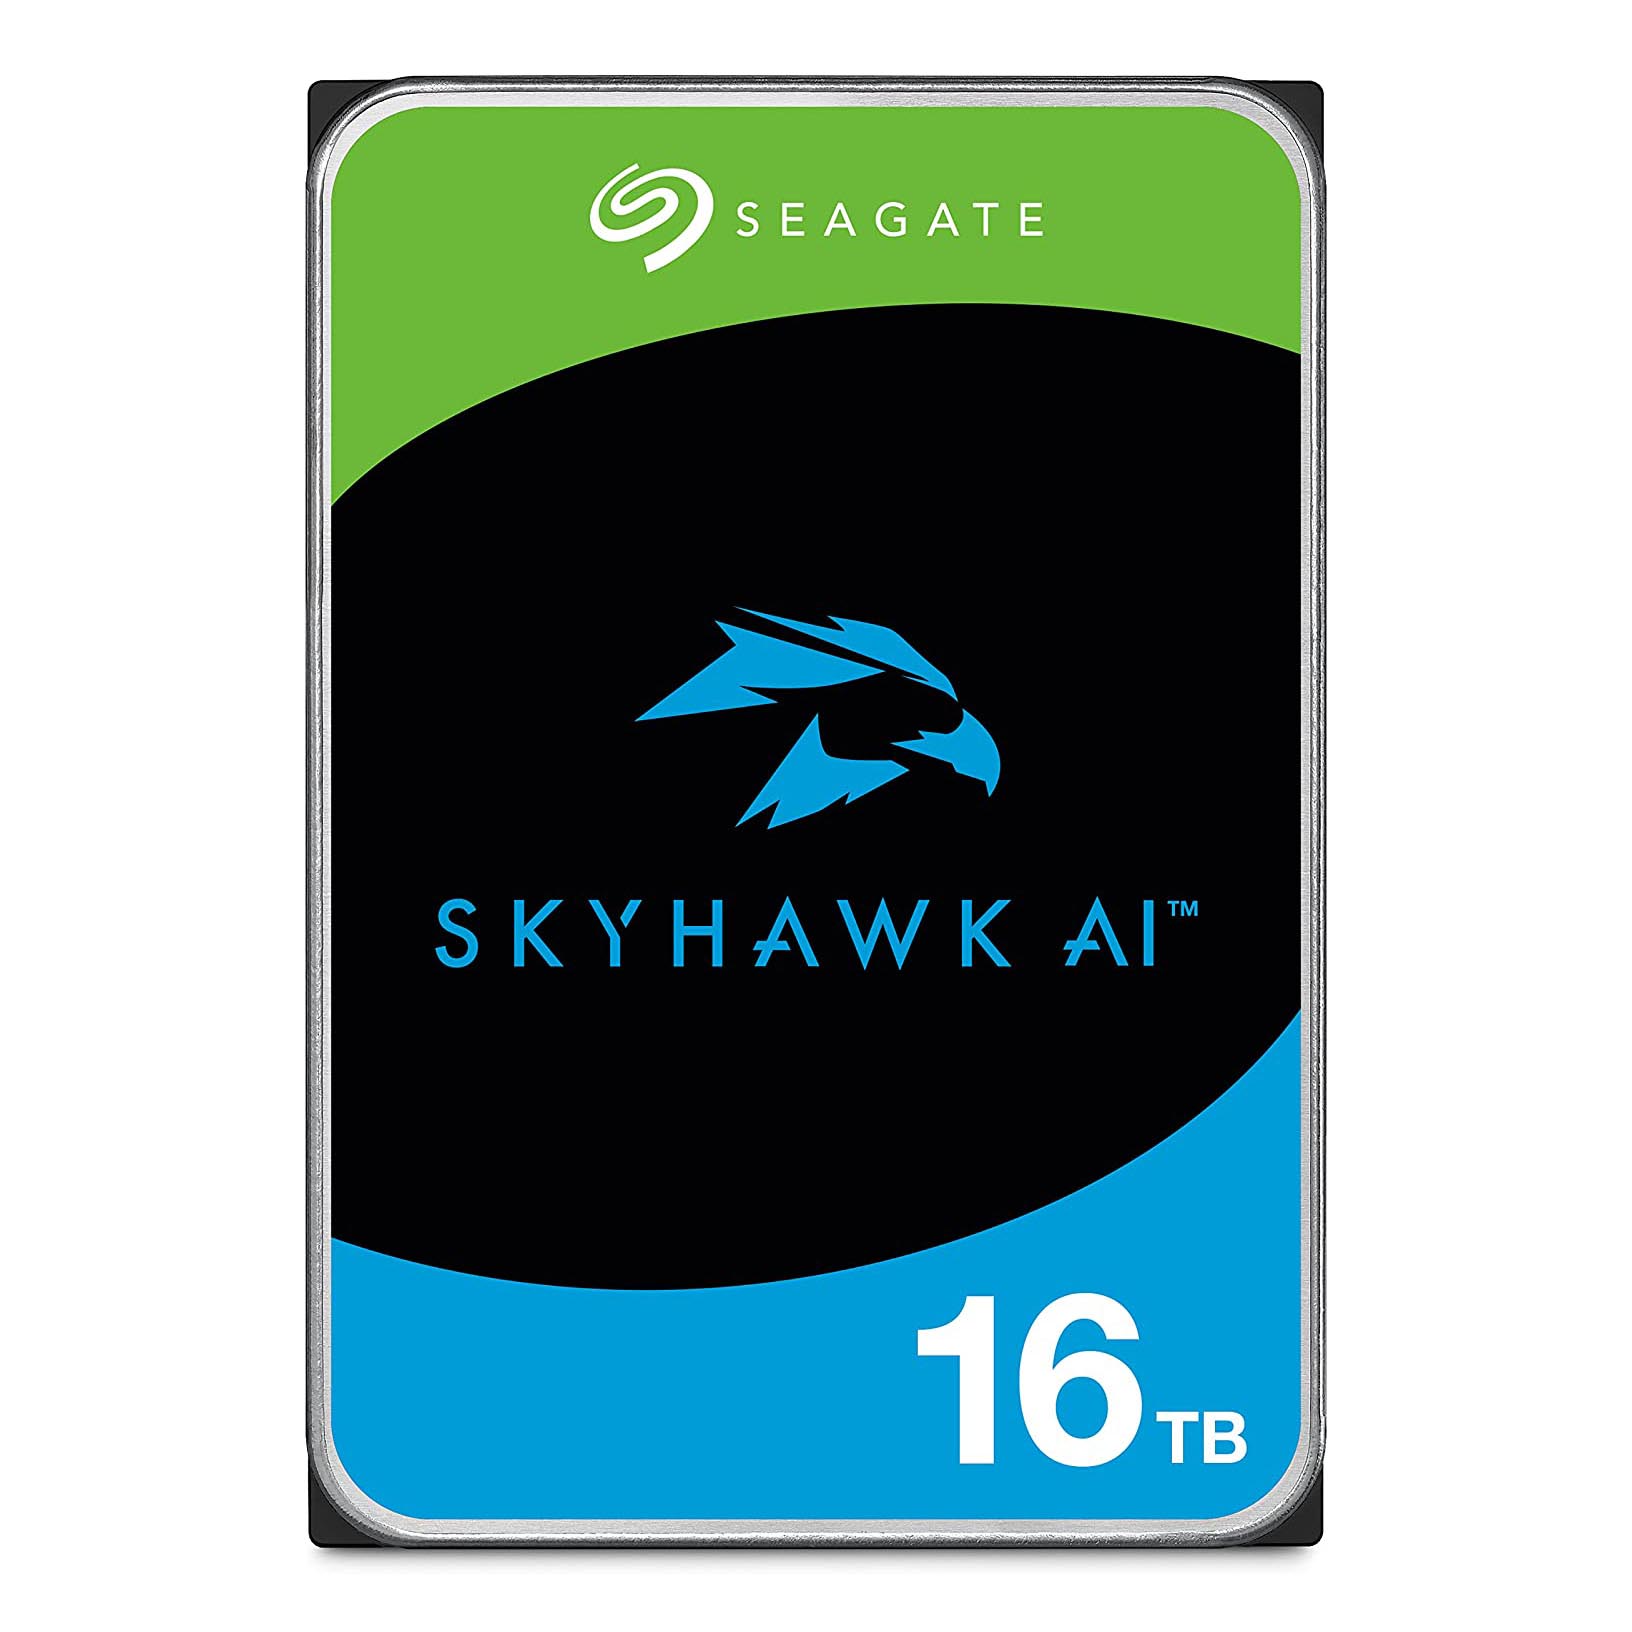 Внутренний жесткий диск Seagate SkyHawk AI, 3.5, 16 ТБ [ST16000VE002] внутренний жесткий диск seagate skyhawk surveillance st10000ve001 10 тб